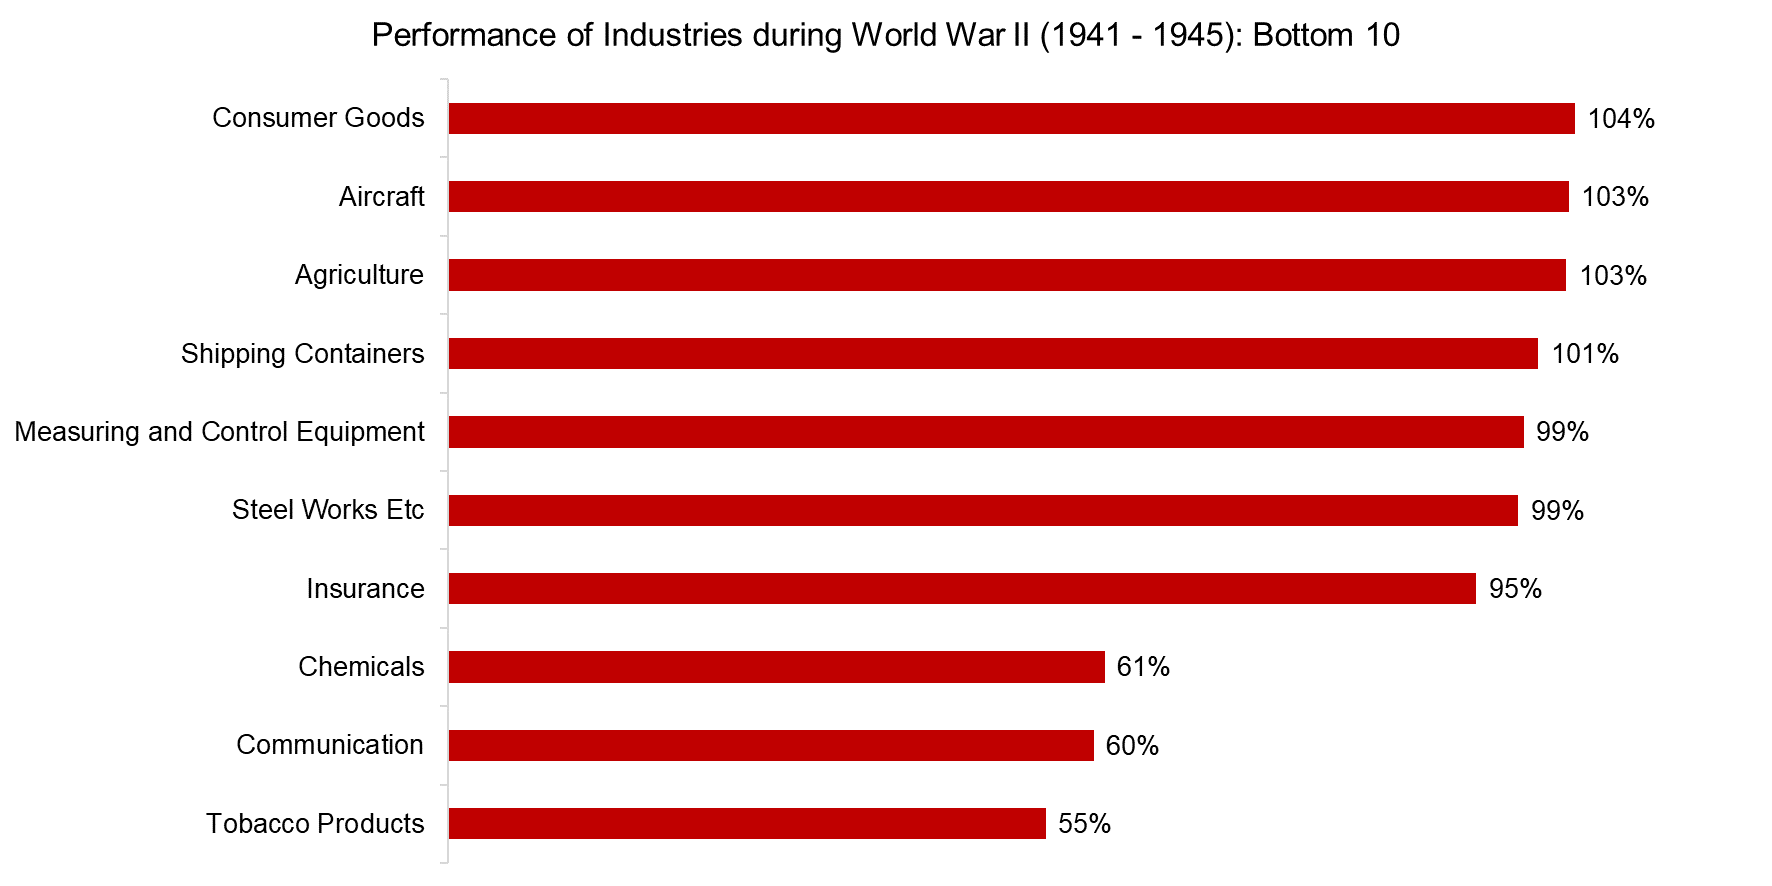 Performance of Industries during World War II (1941 - 1945) Bottom 10